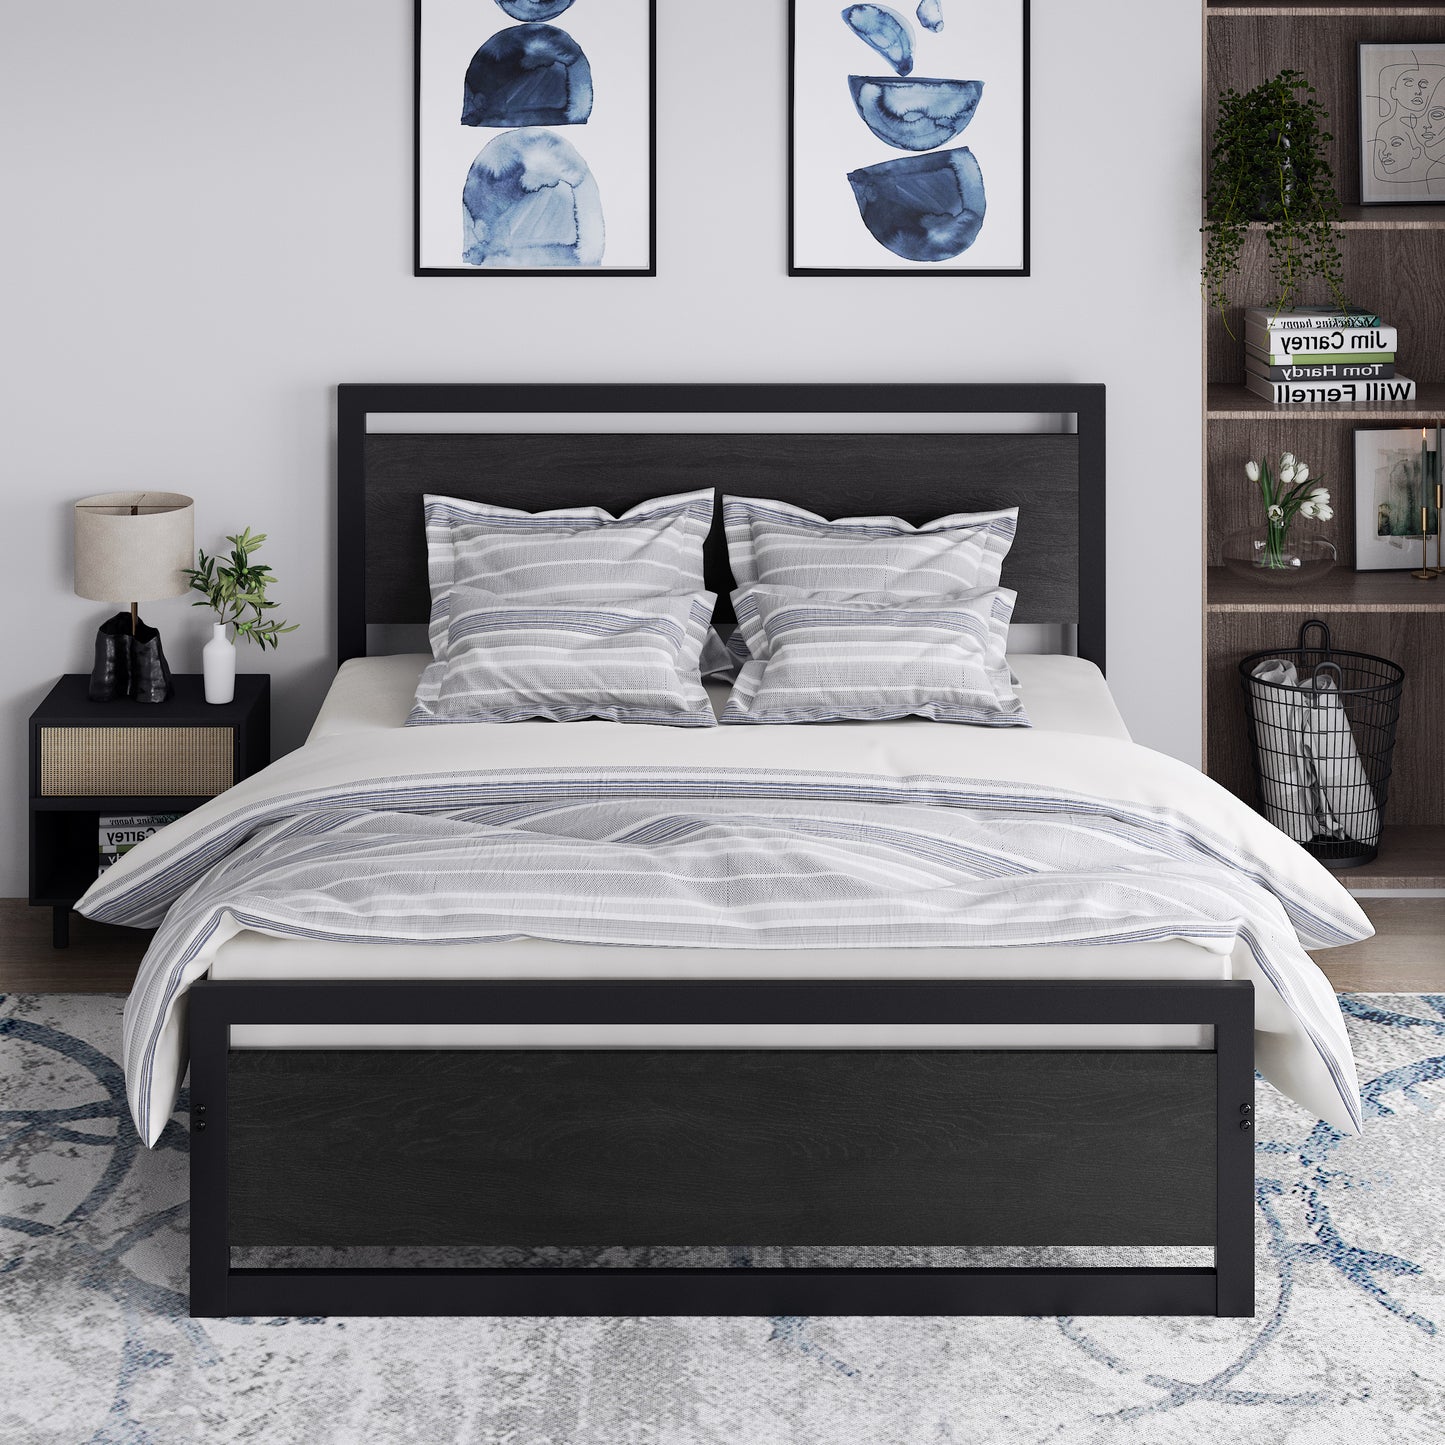 Allewie Queen Size Platform Metal Black Bed Frame with Wooden Headboard&Footboard